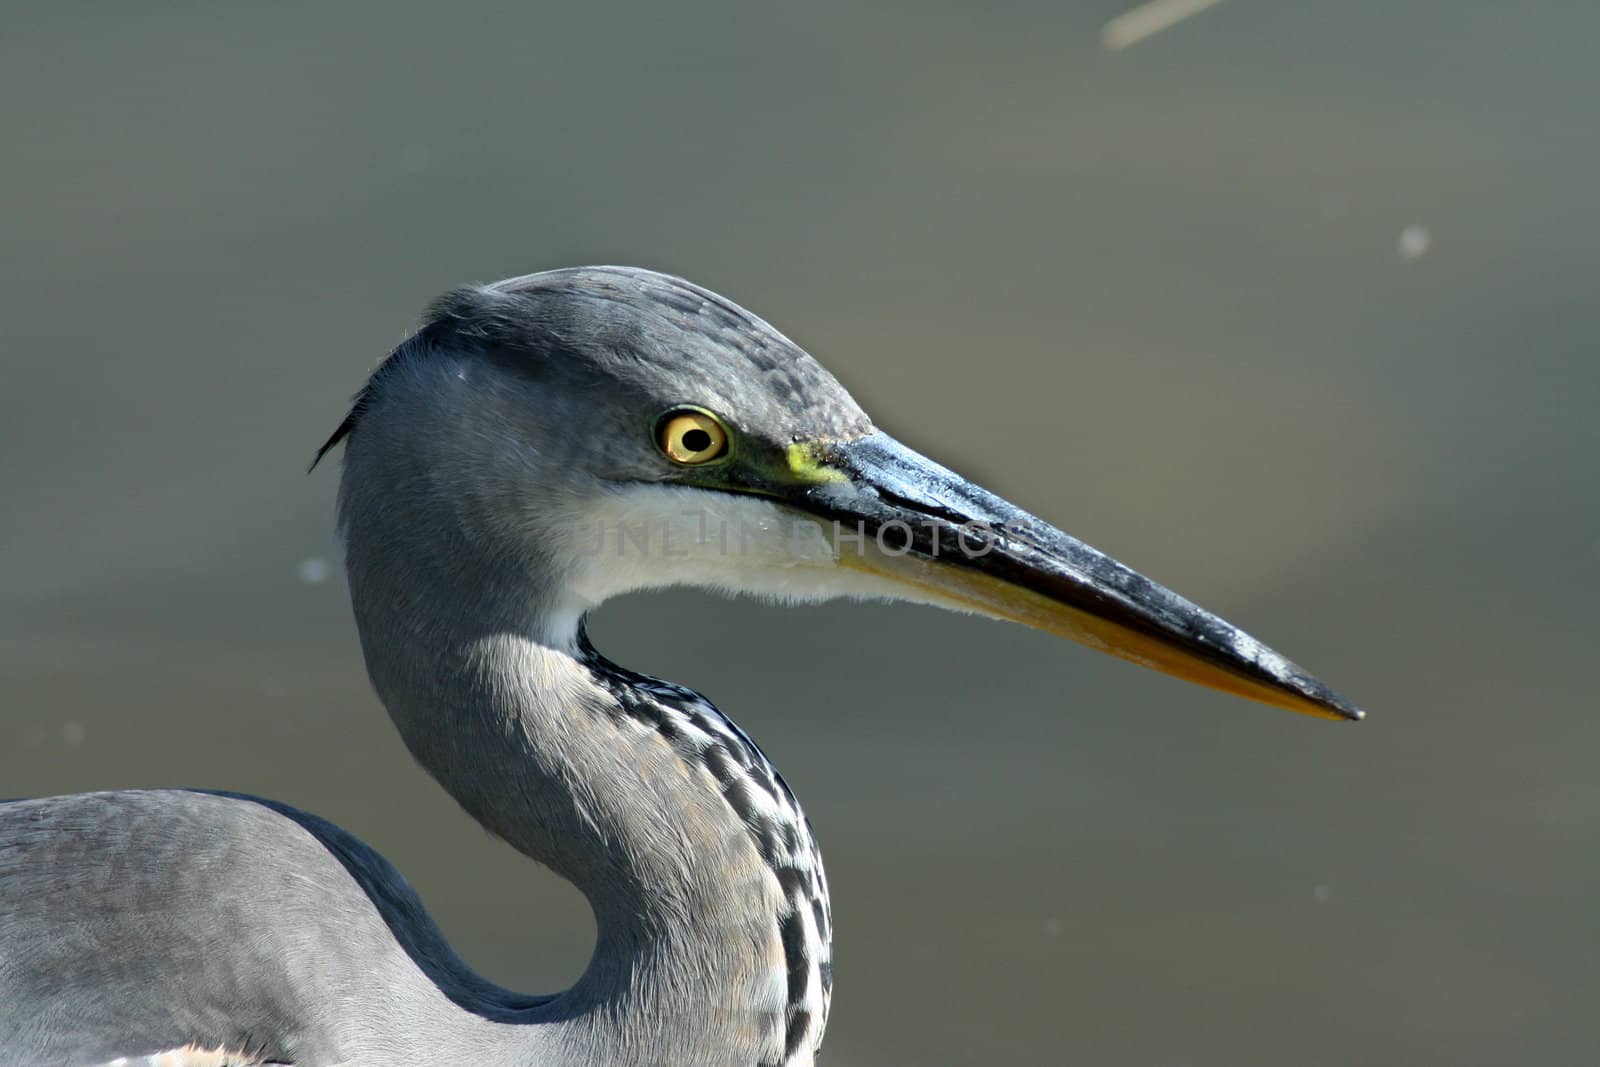 Gray heron by silencefoto